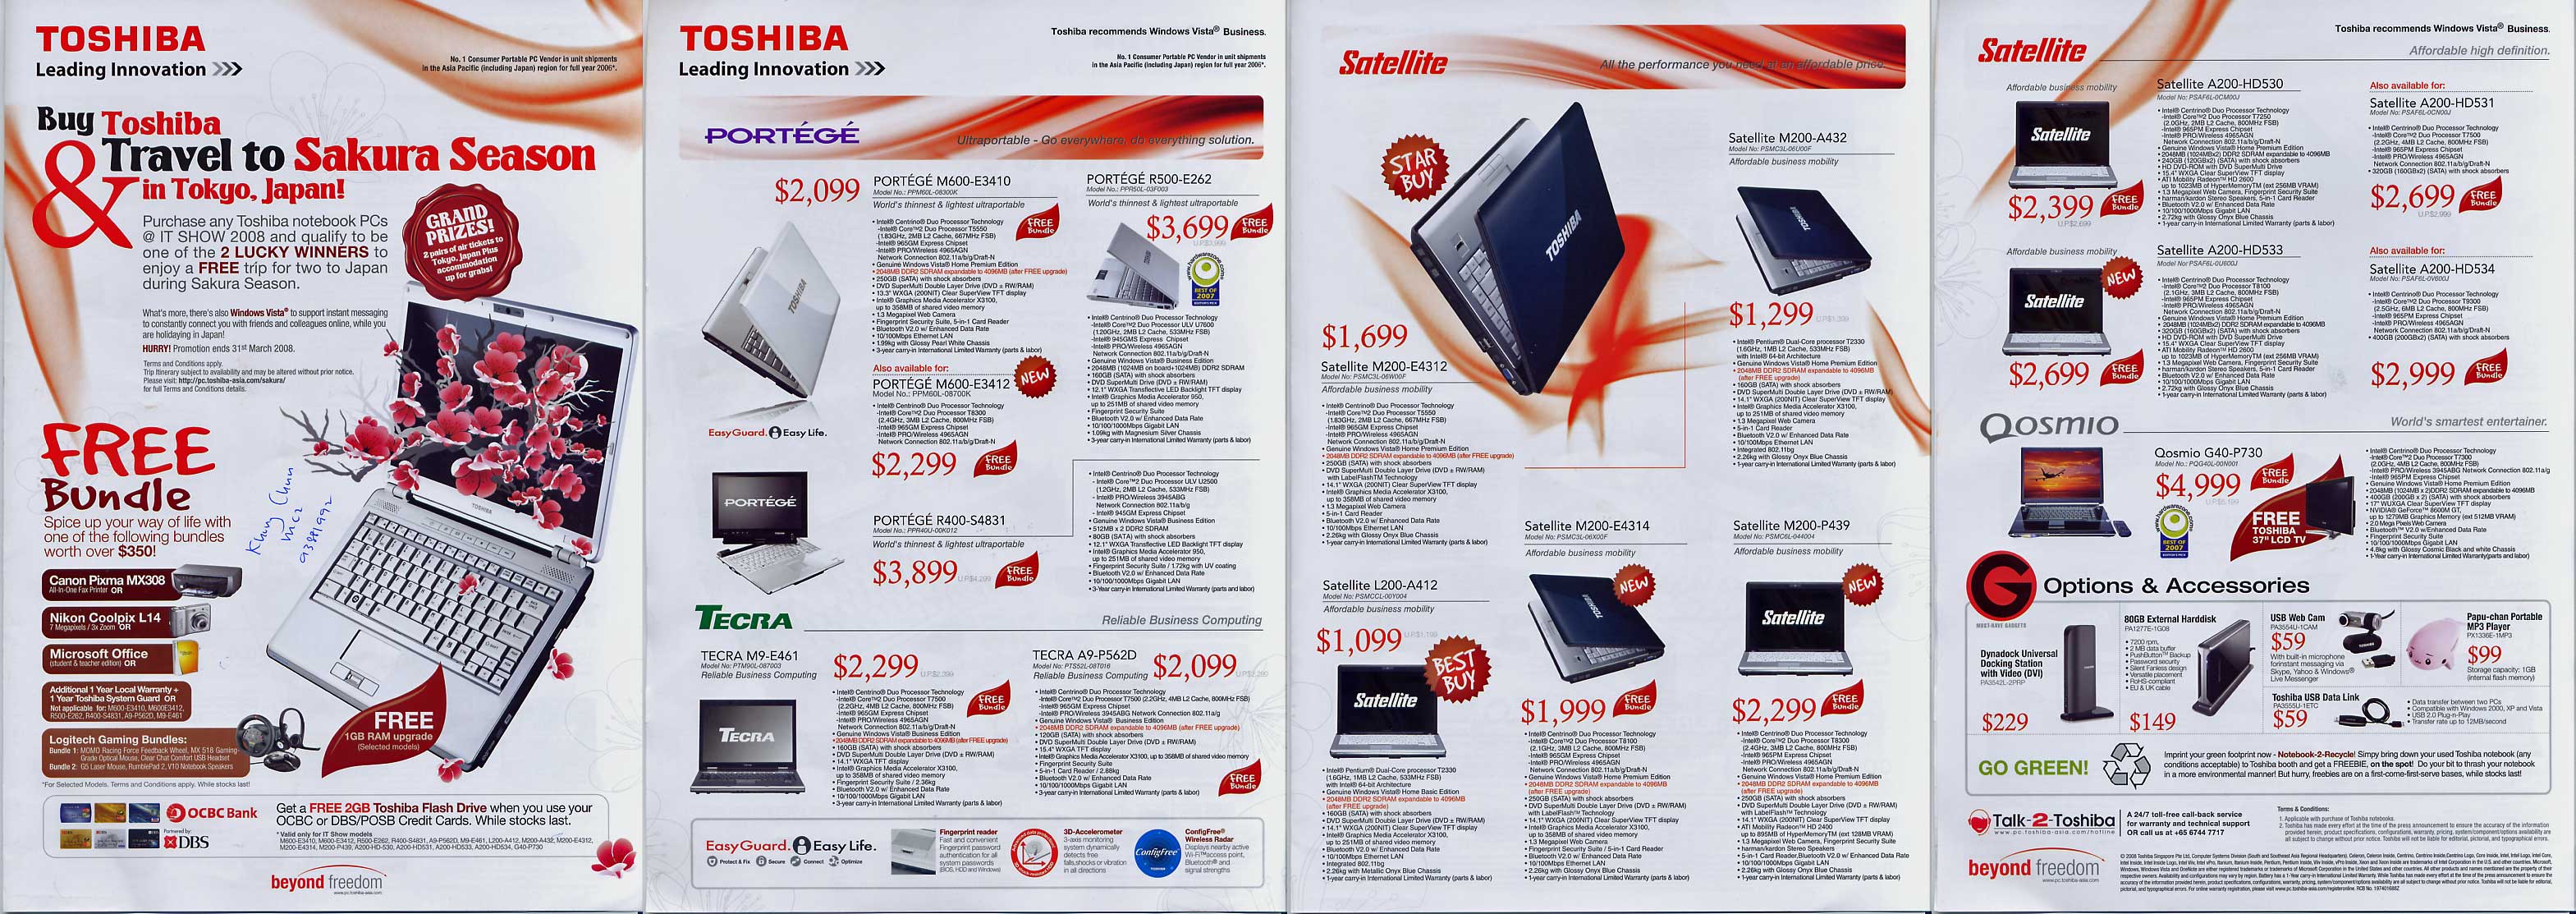 IT Show 2008 price list image brochure of Toshiba Notebooks Portege Satellite M600 R500 R400 Tecra A9 L200 M200 Qosmio